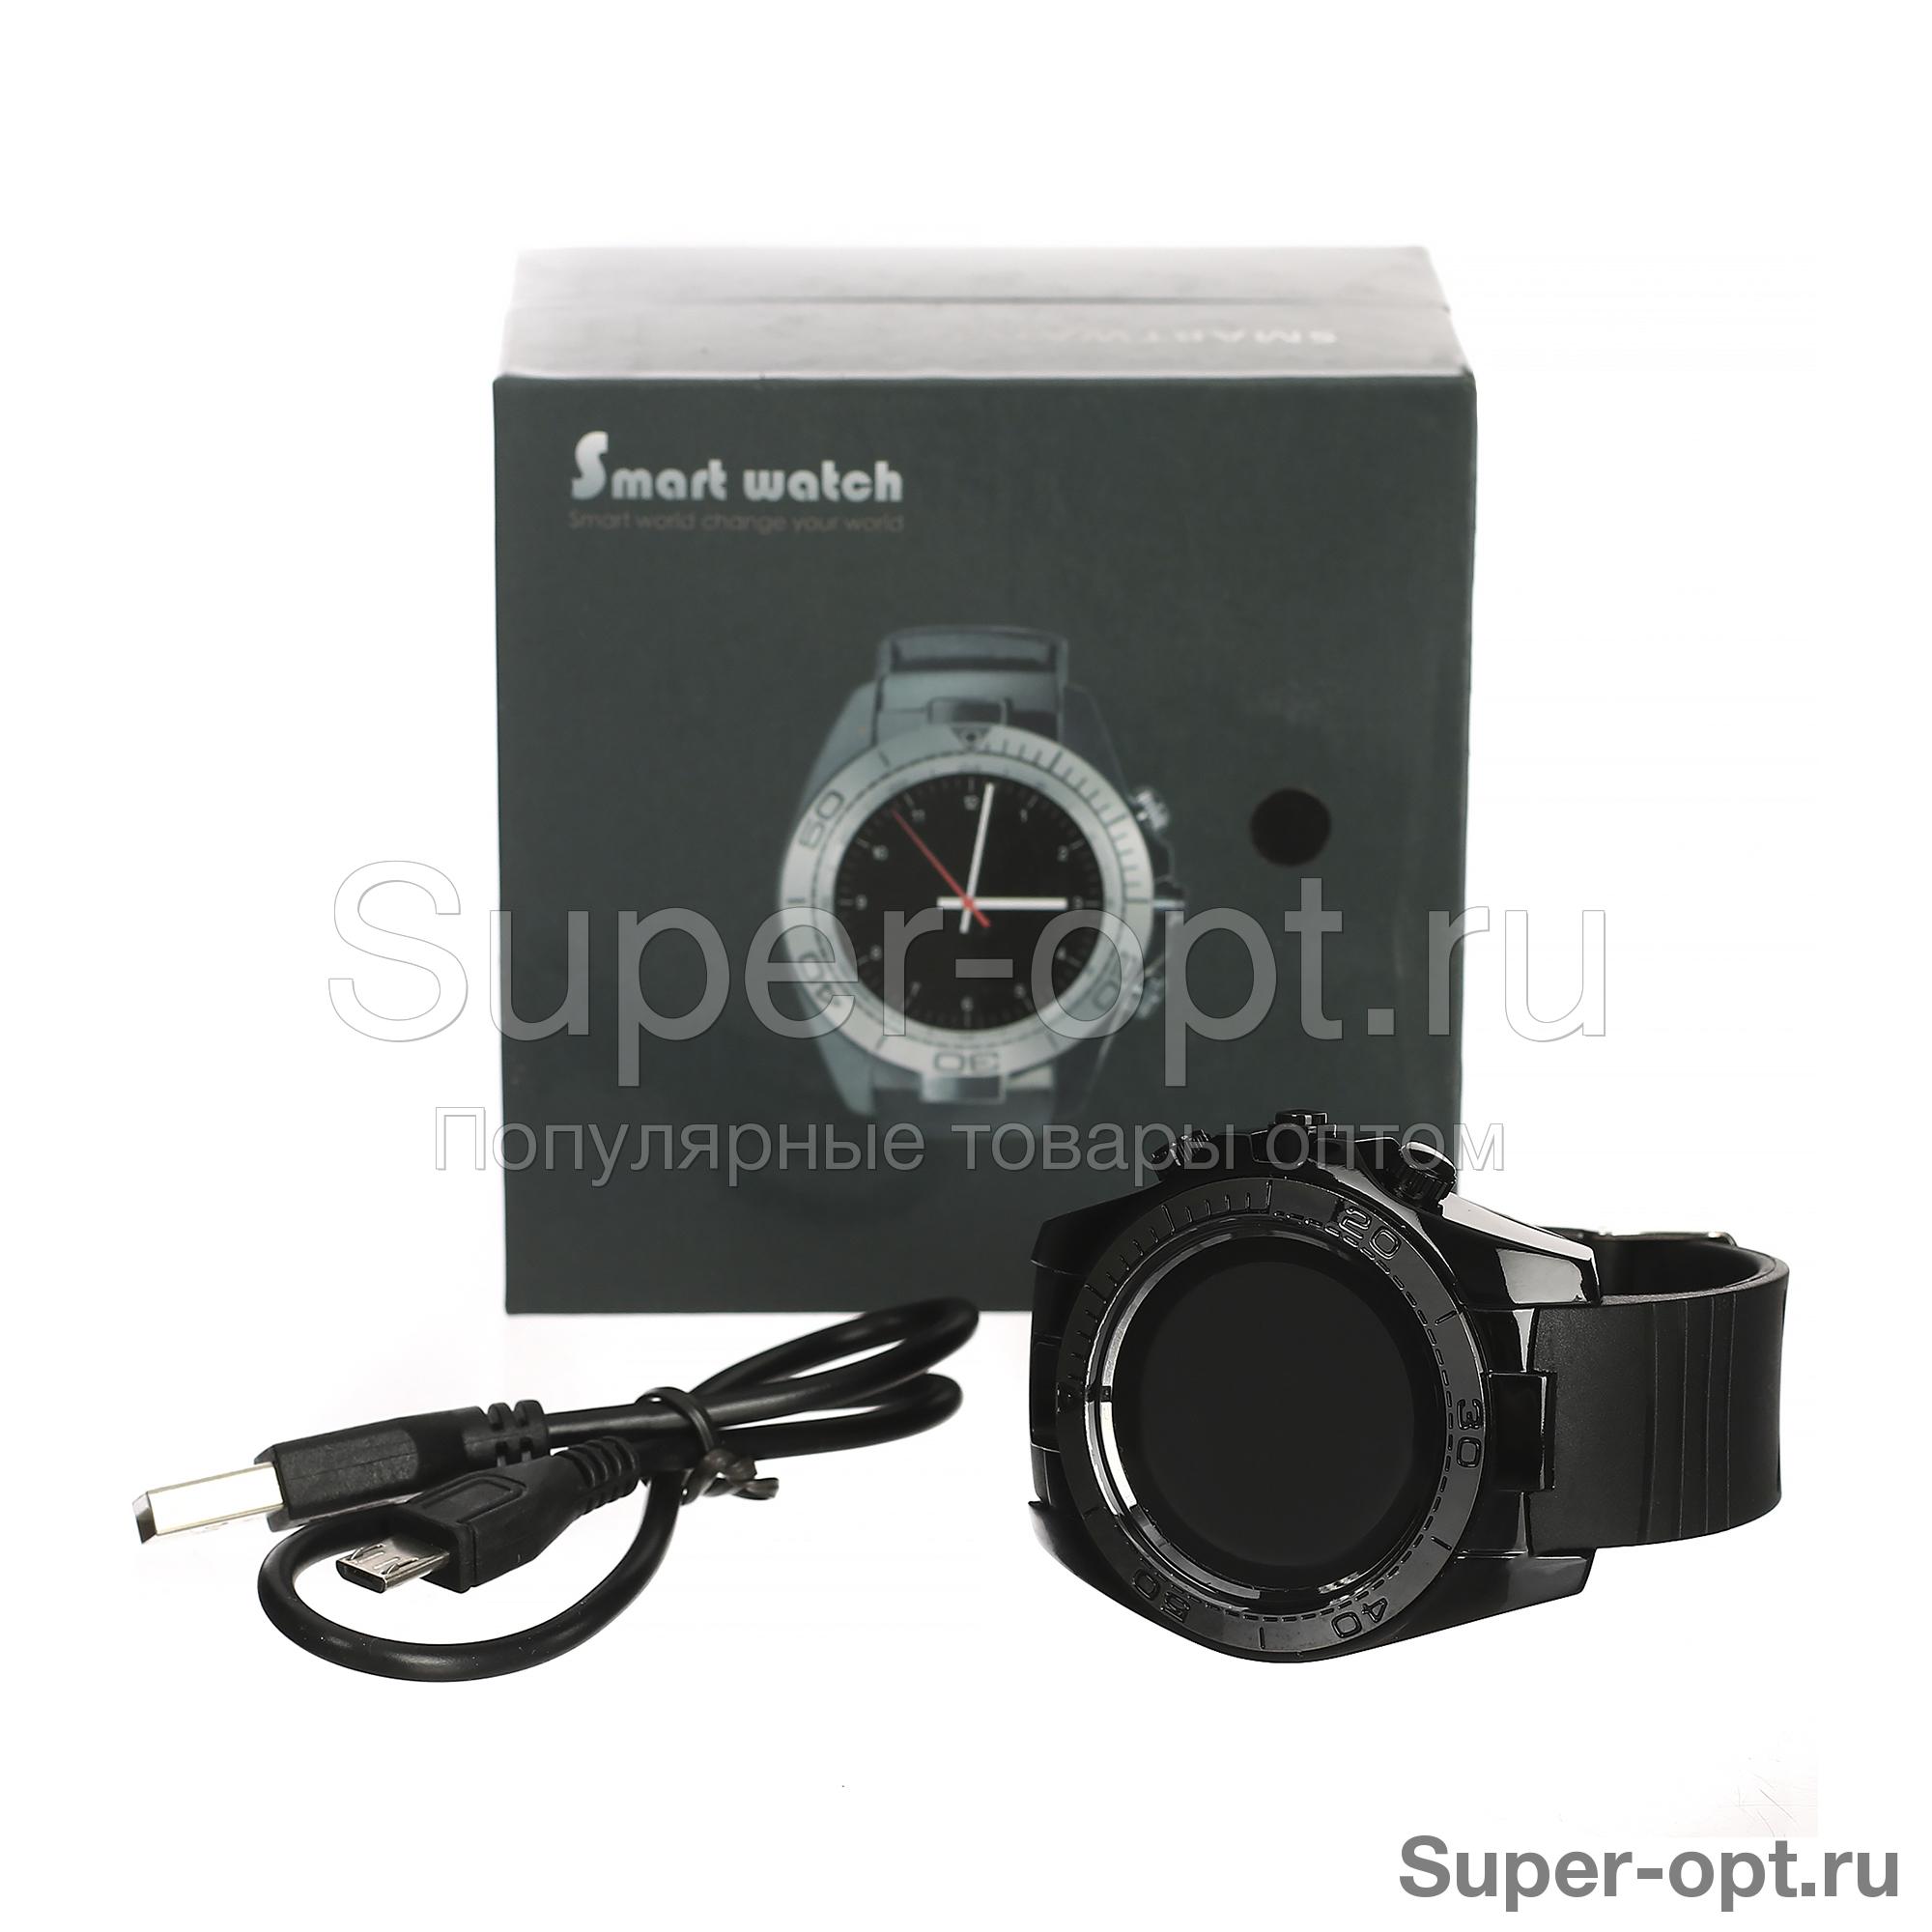 Смарт-часы Smart Watch SW007